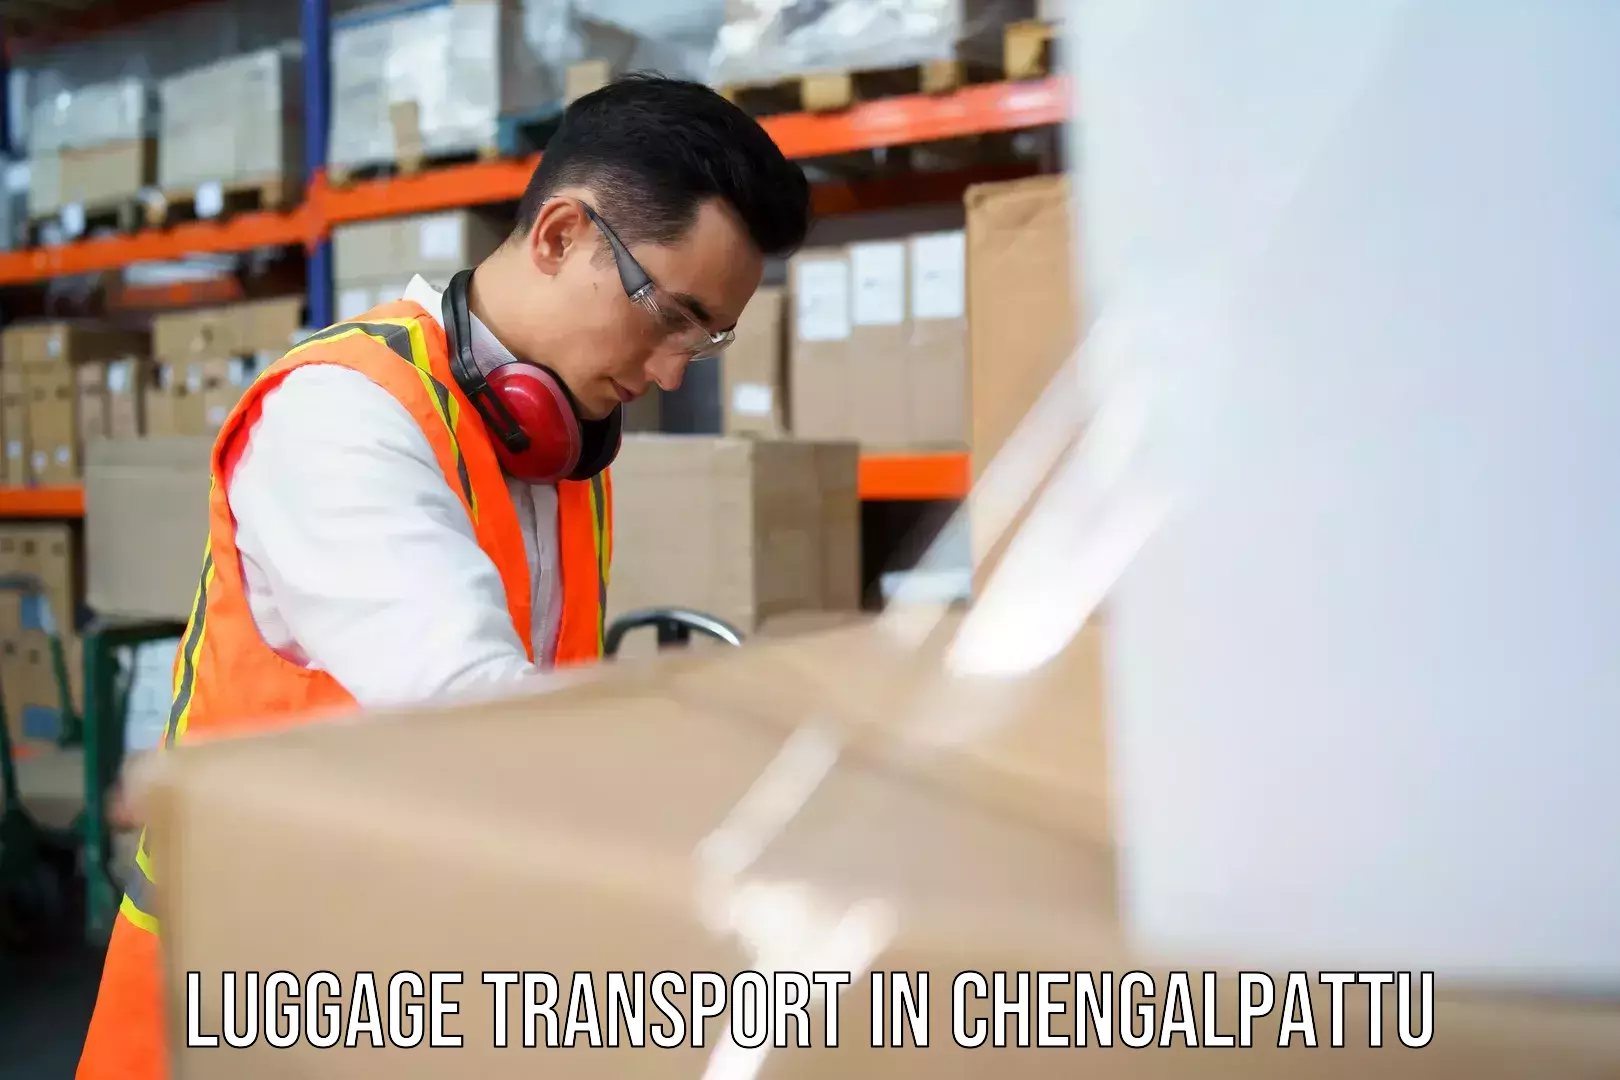 Automated luggage transport in Chengalpattu